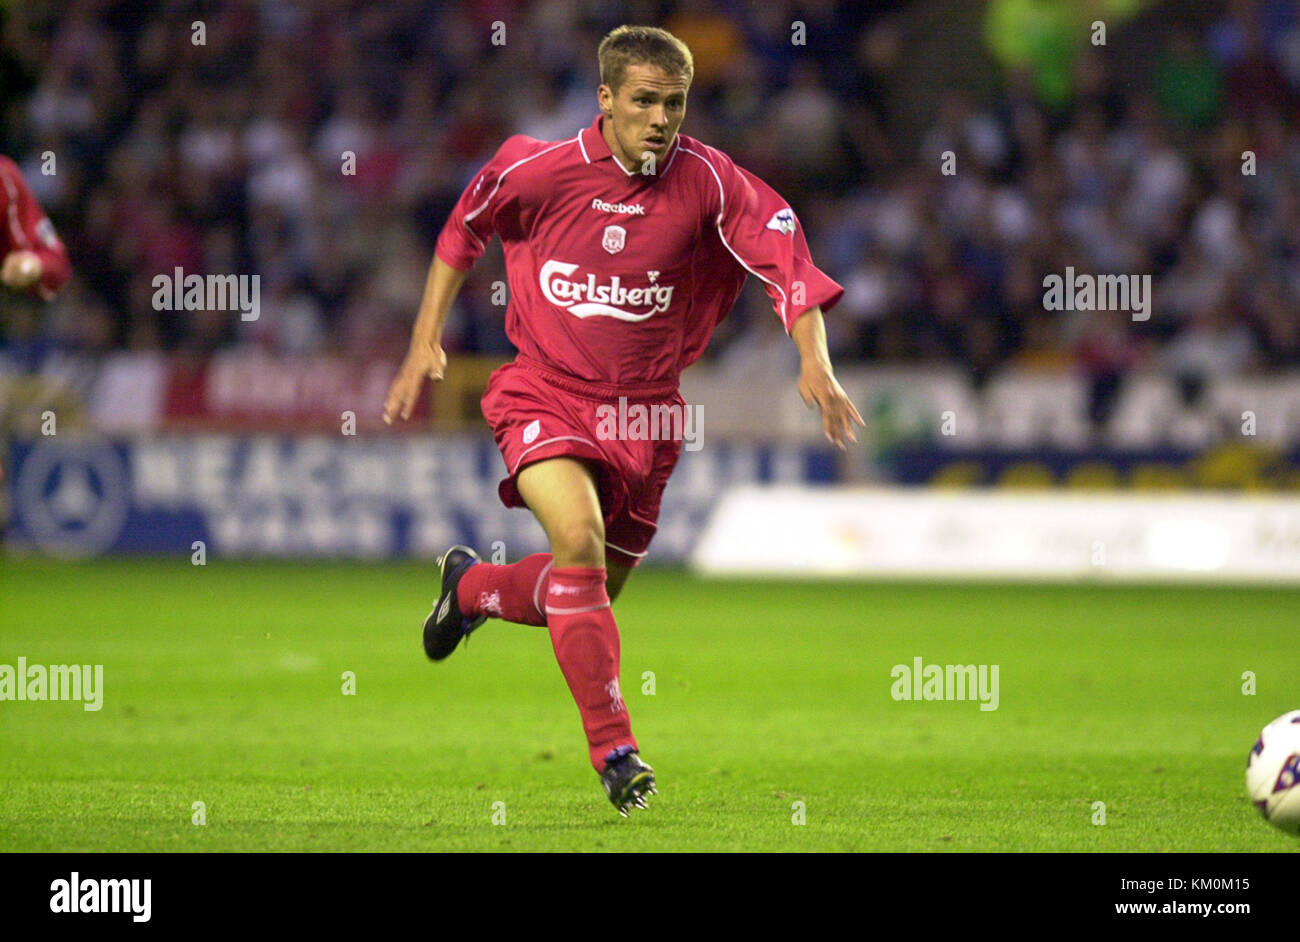 Liverpool footballer Michael Owen 3/8/01 Stock Photo